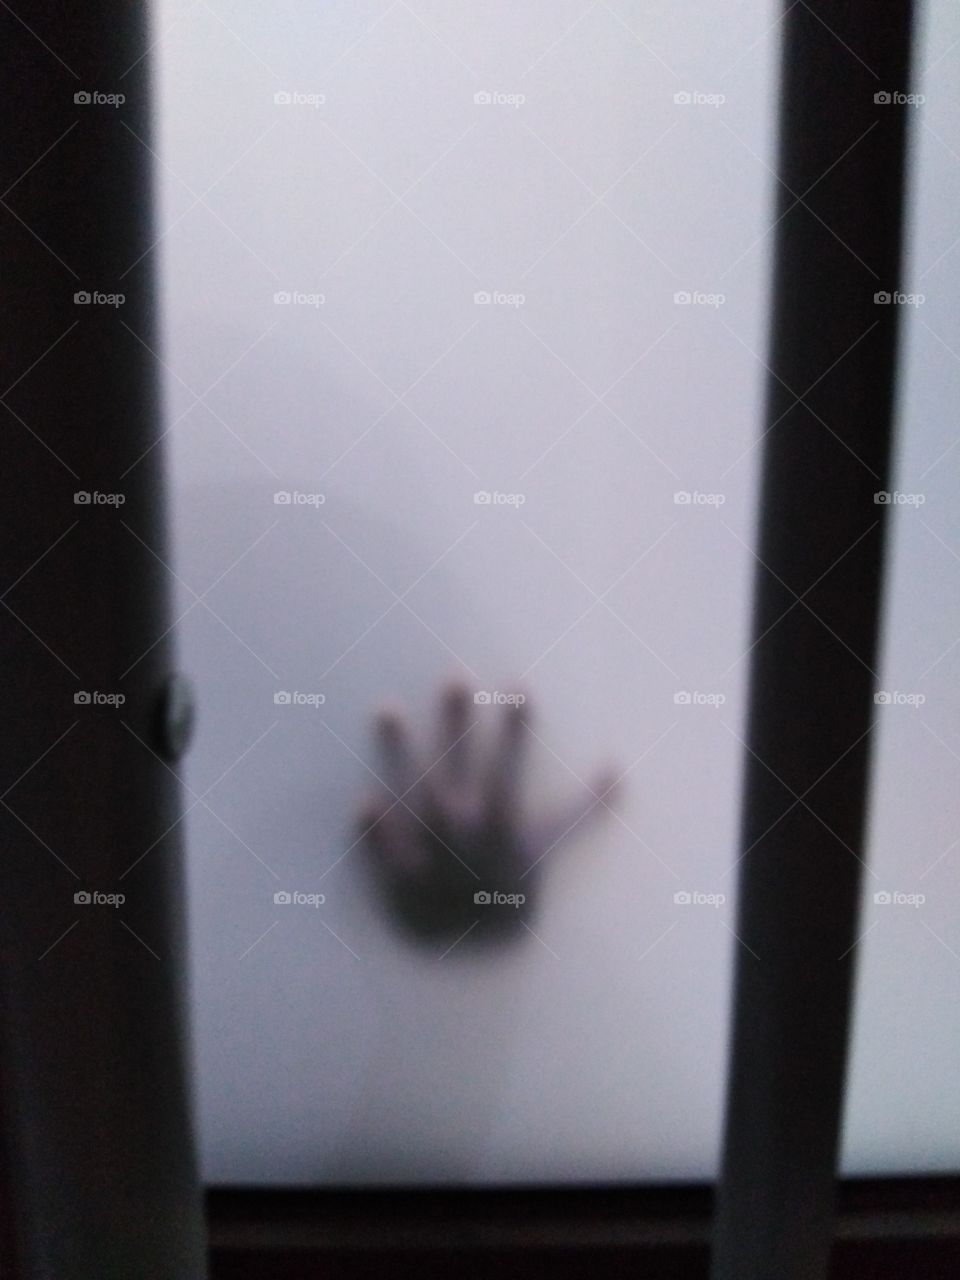 Shadow of a baby's hand through sliding door.